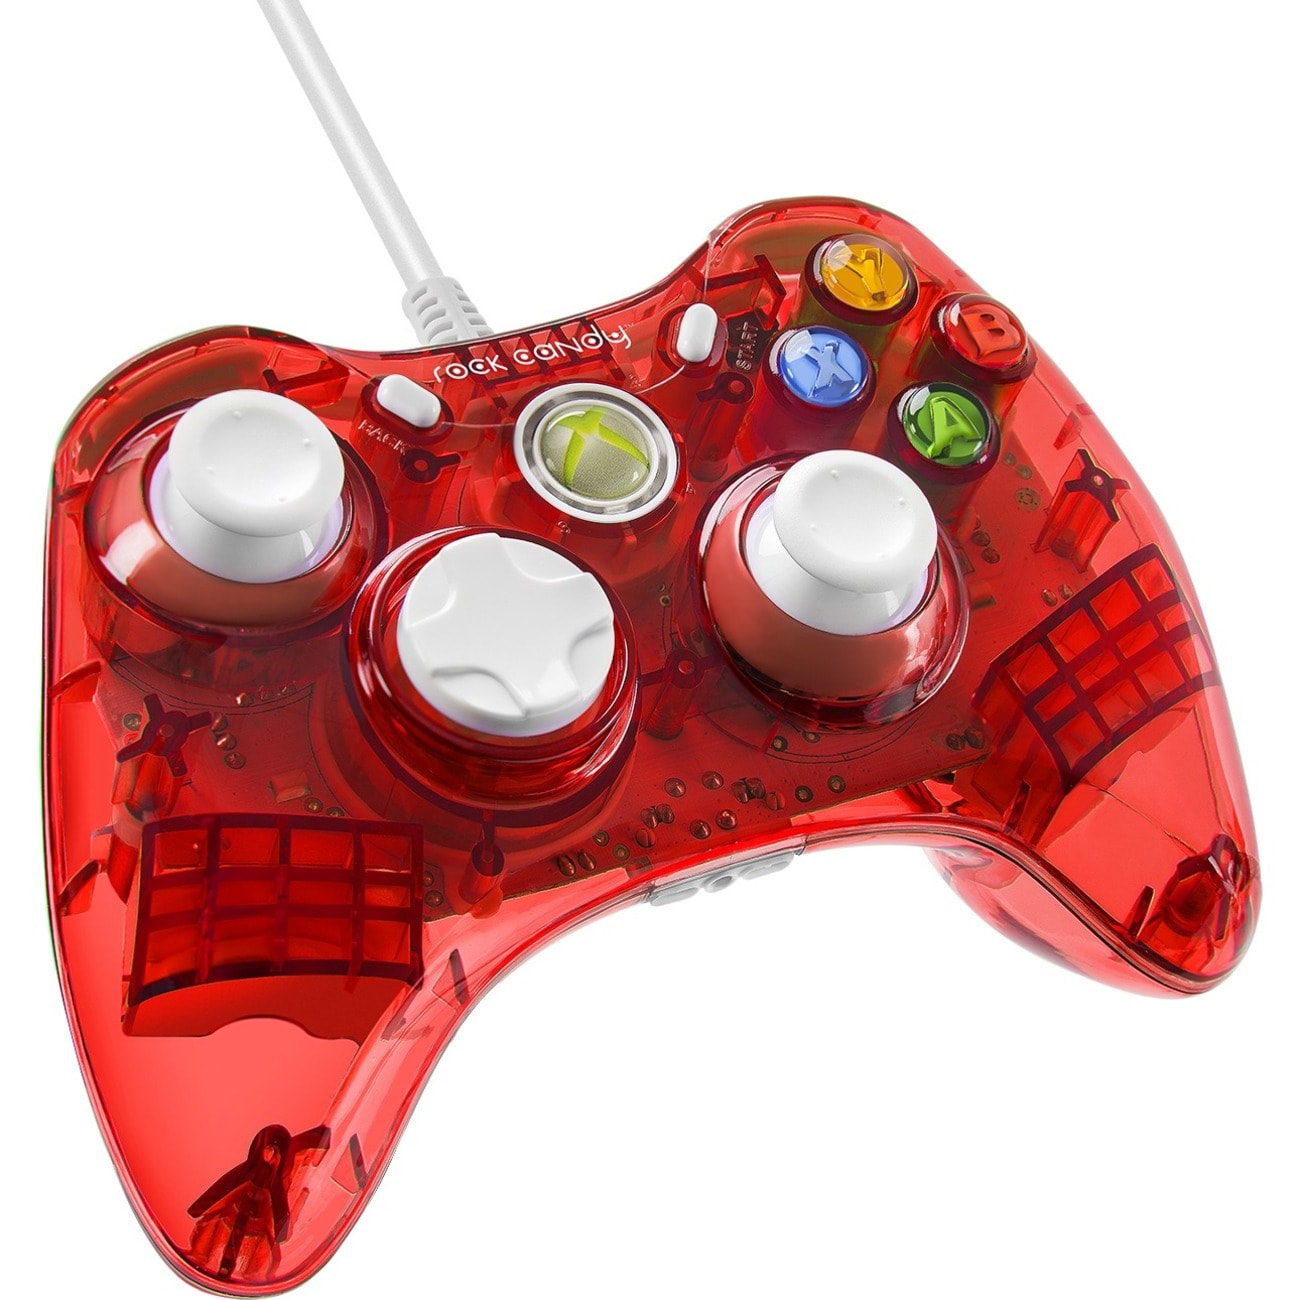 Xbox 360 rock candy controller target - tangobilla